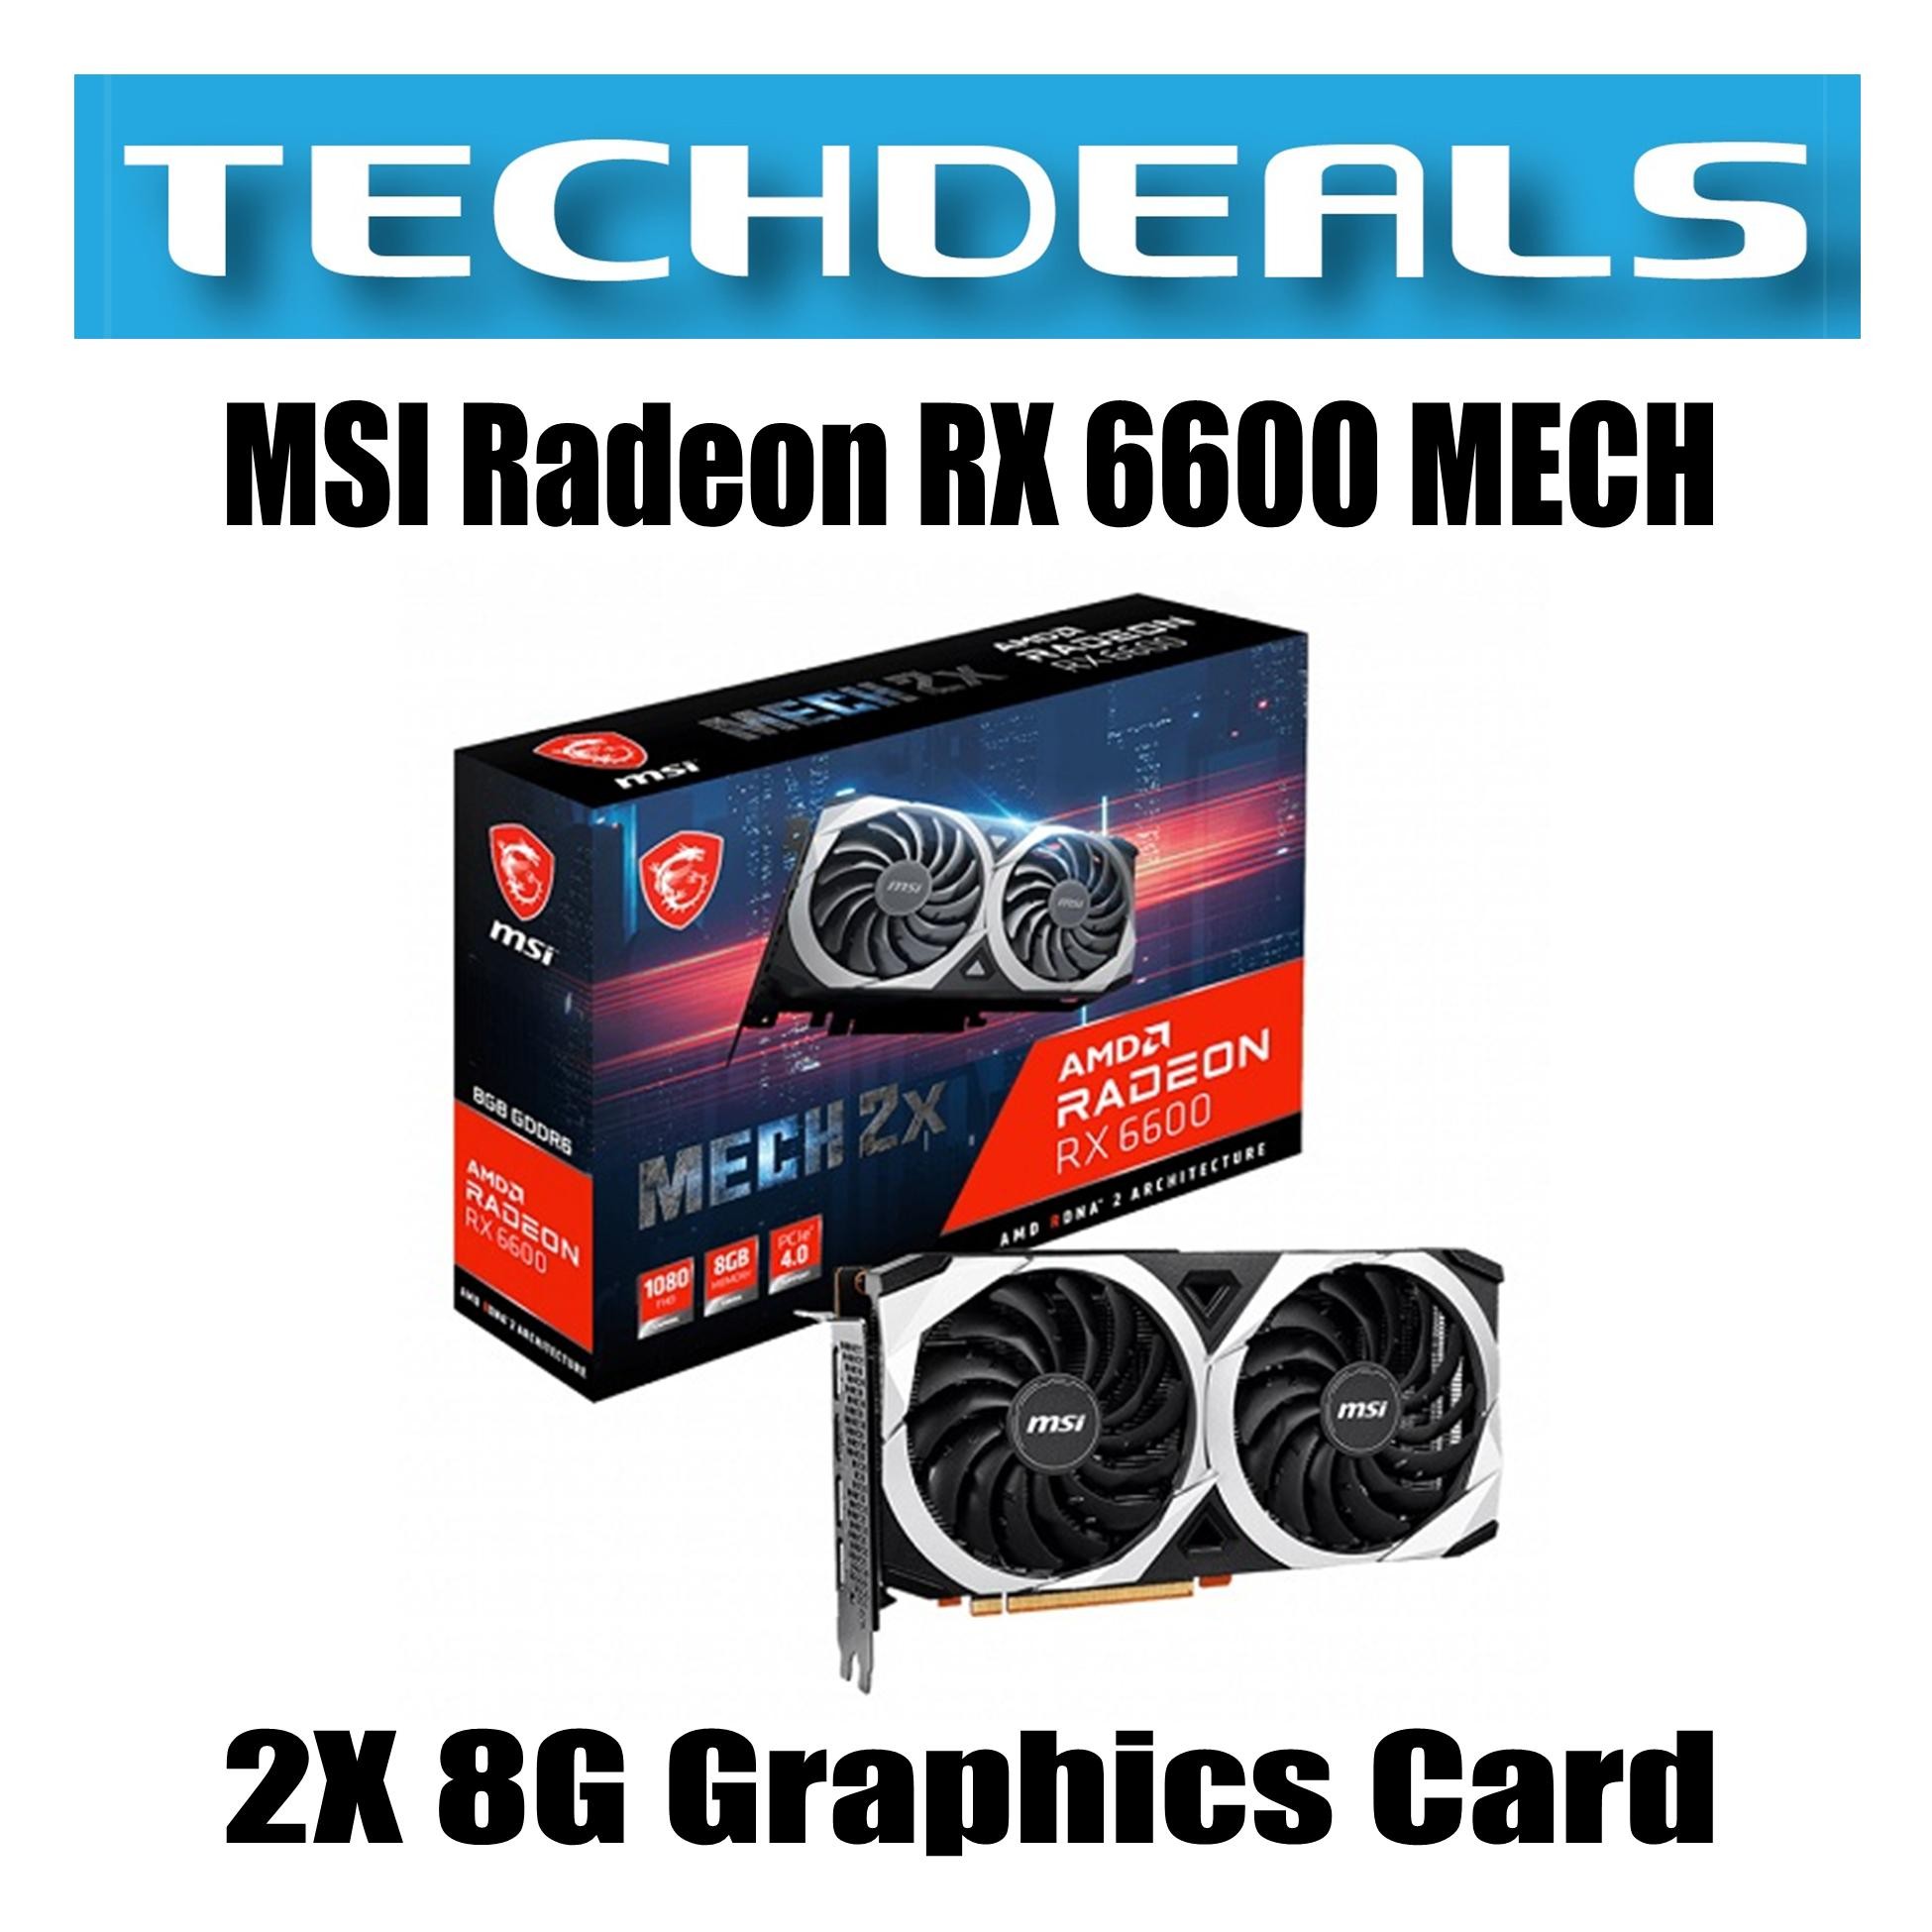 PC/タブレット PC周辺機器 MSI Radeon RX 6600 MECH 2X 8G Graphics Card